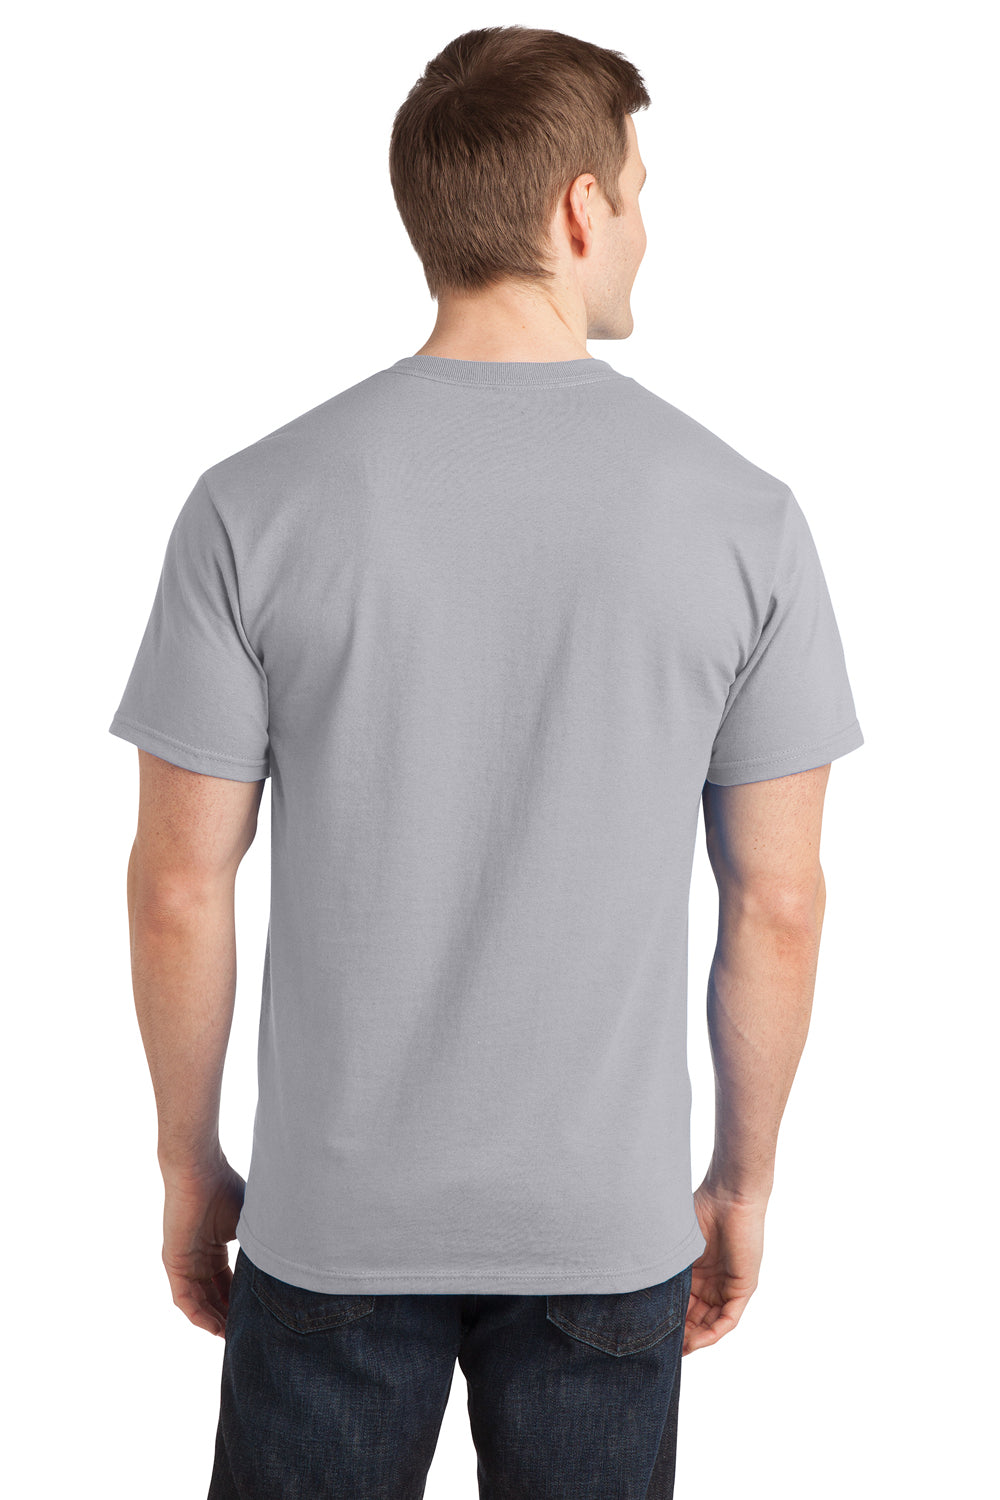 Port & Company PC150 Mens Short Sleeve Crewneck T-Shirt Silver Grey Back